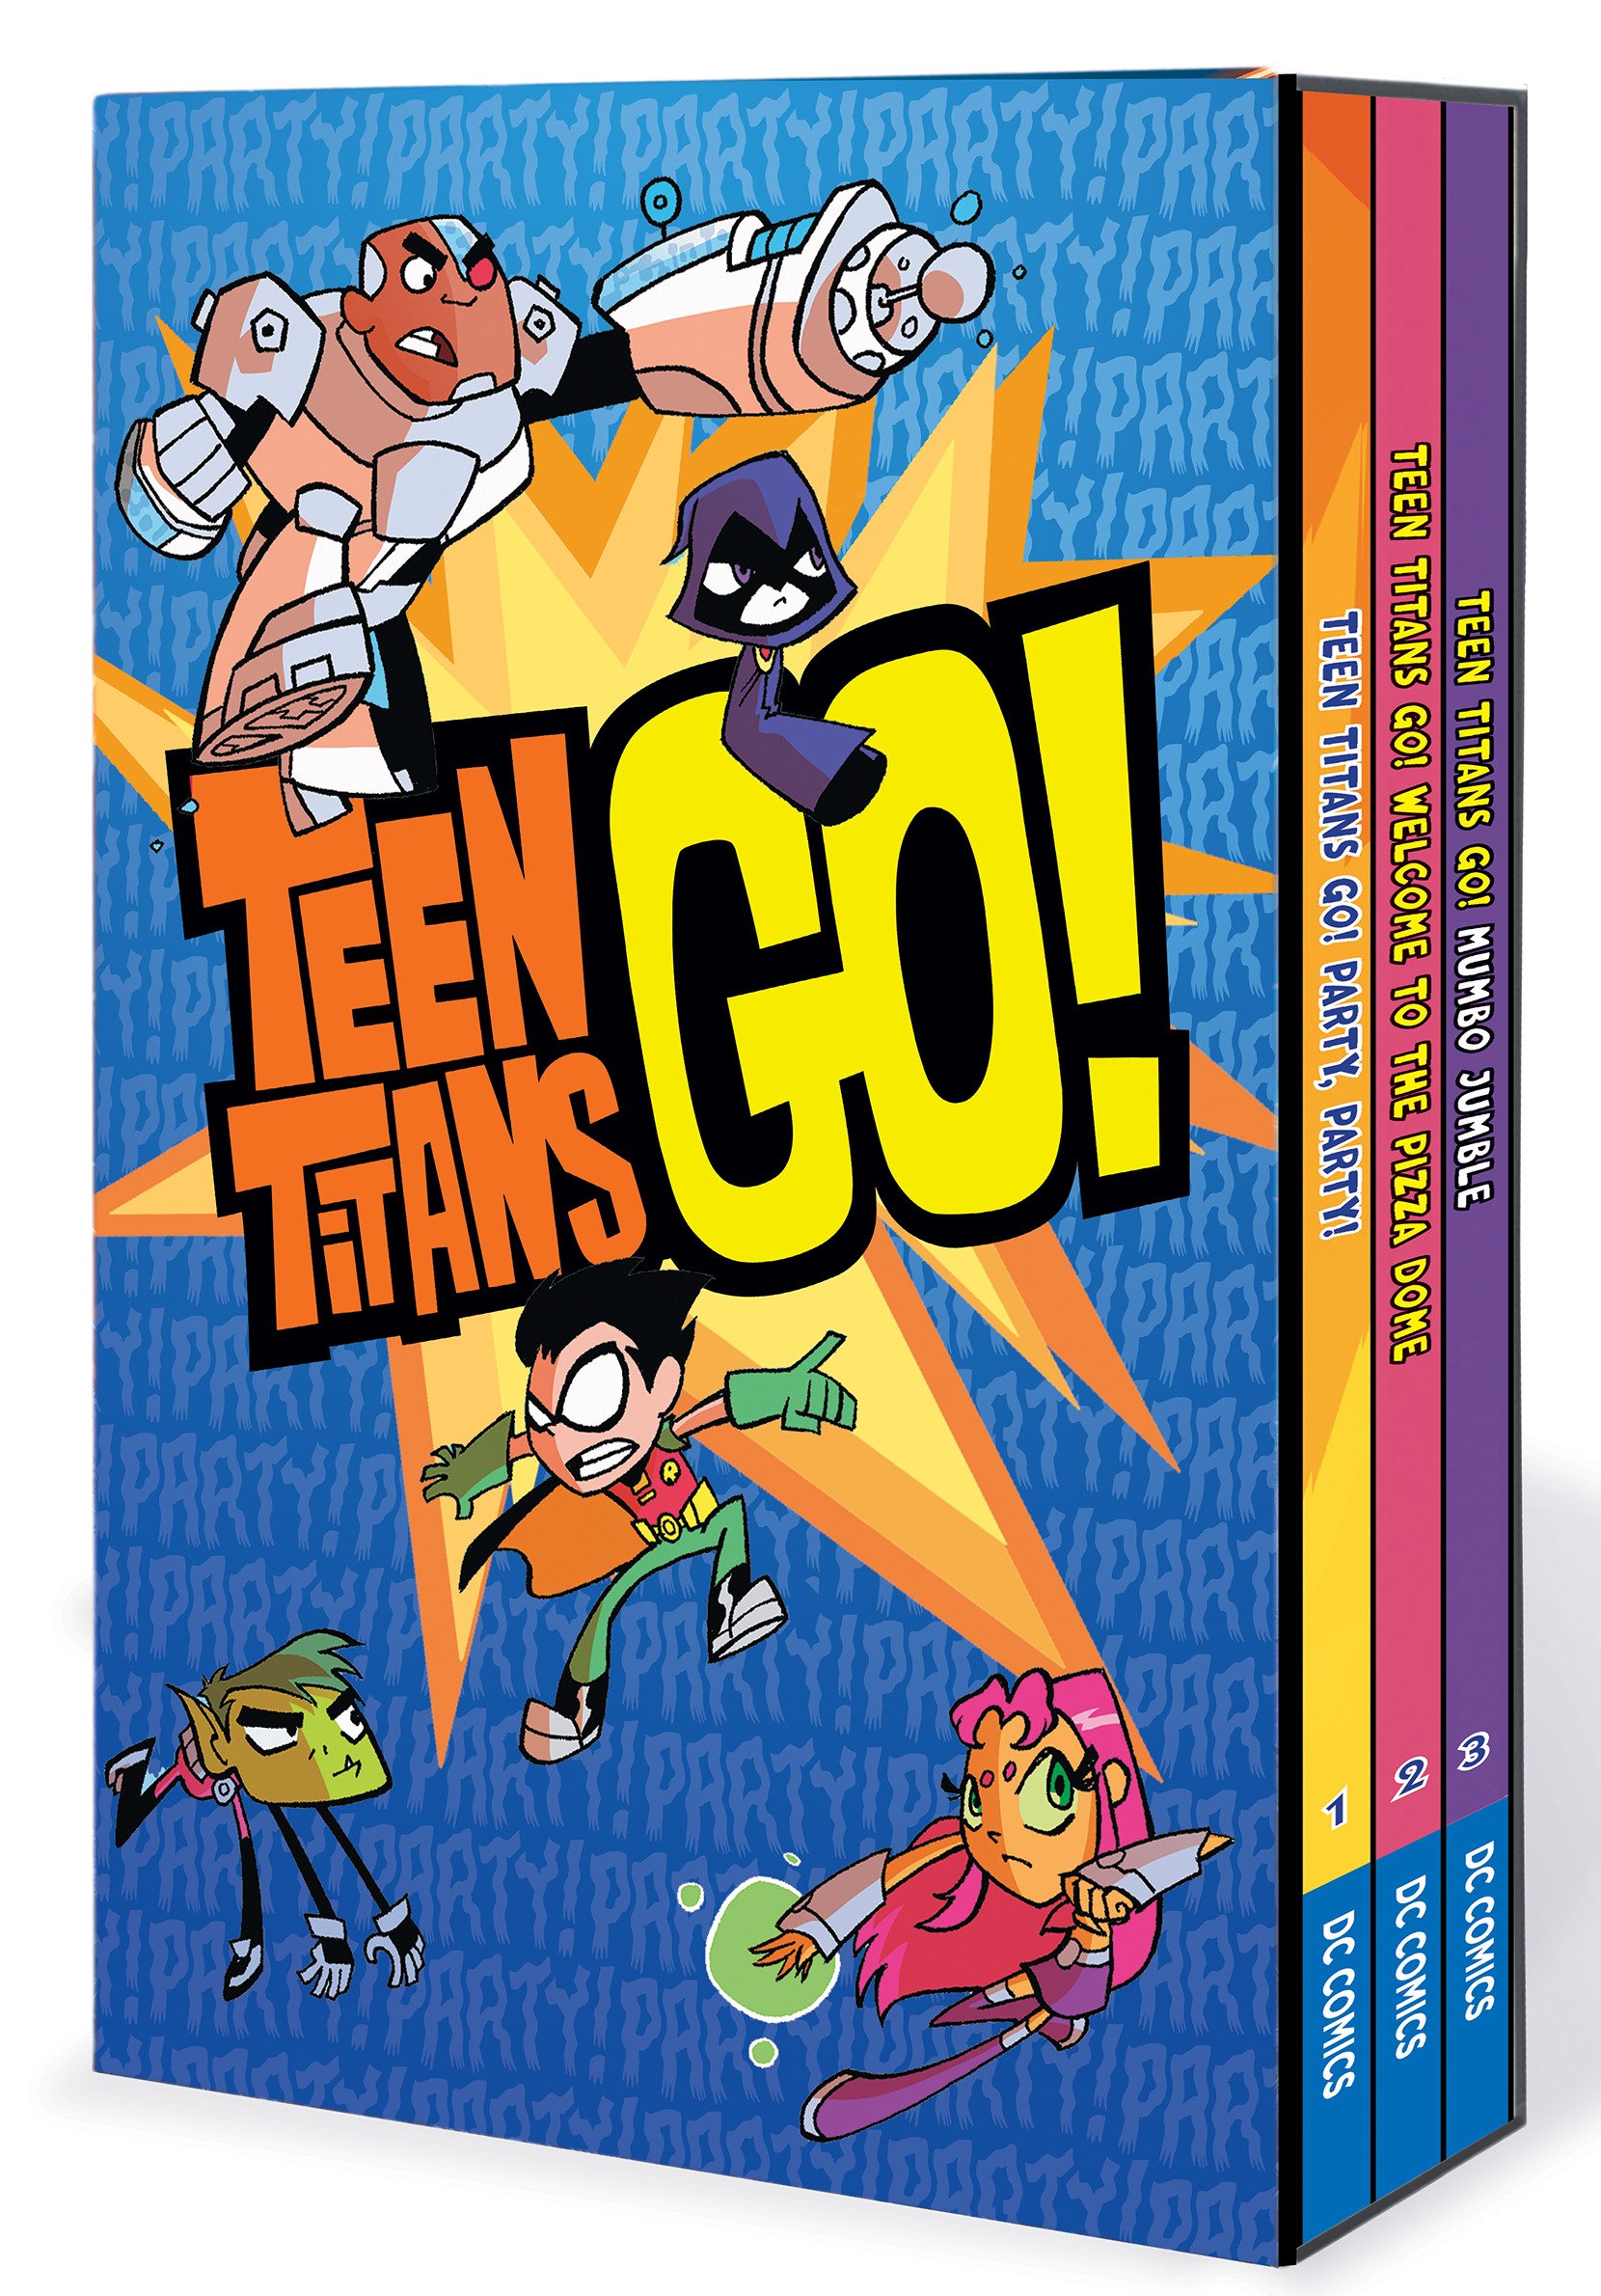 Teen Titans Go Graphic Novel Box Set 1 TV or Not TV